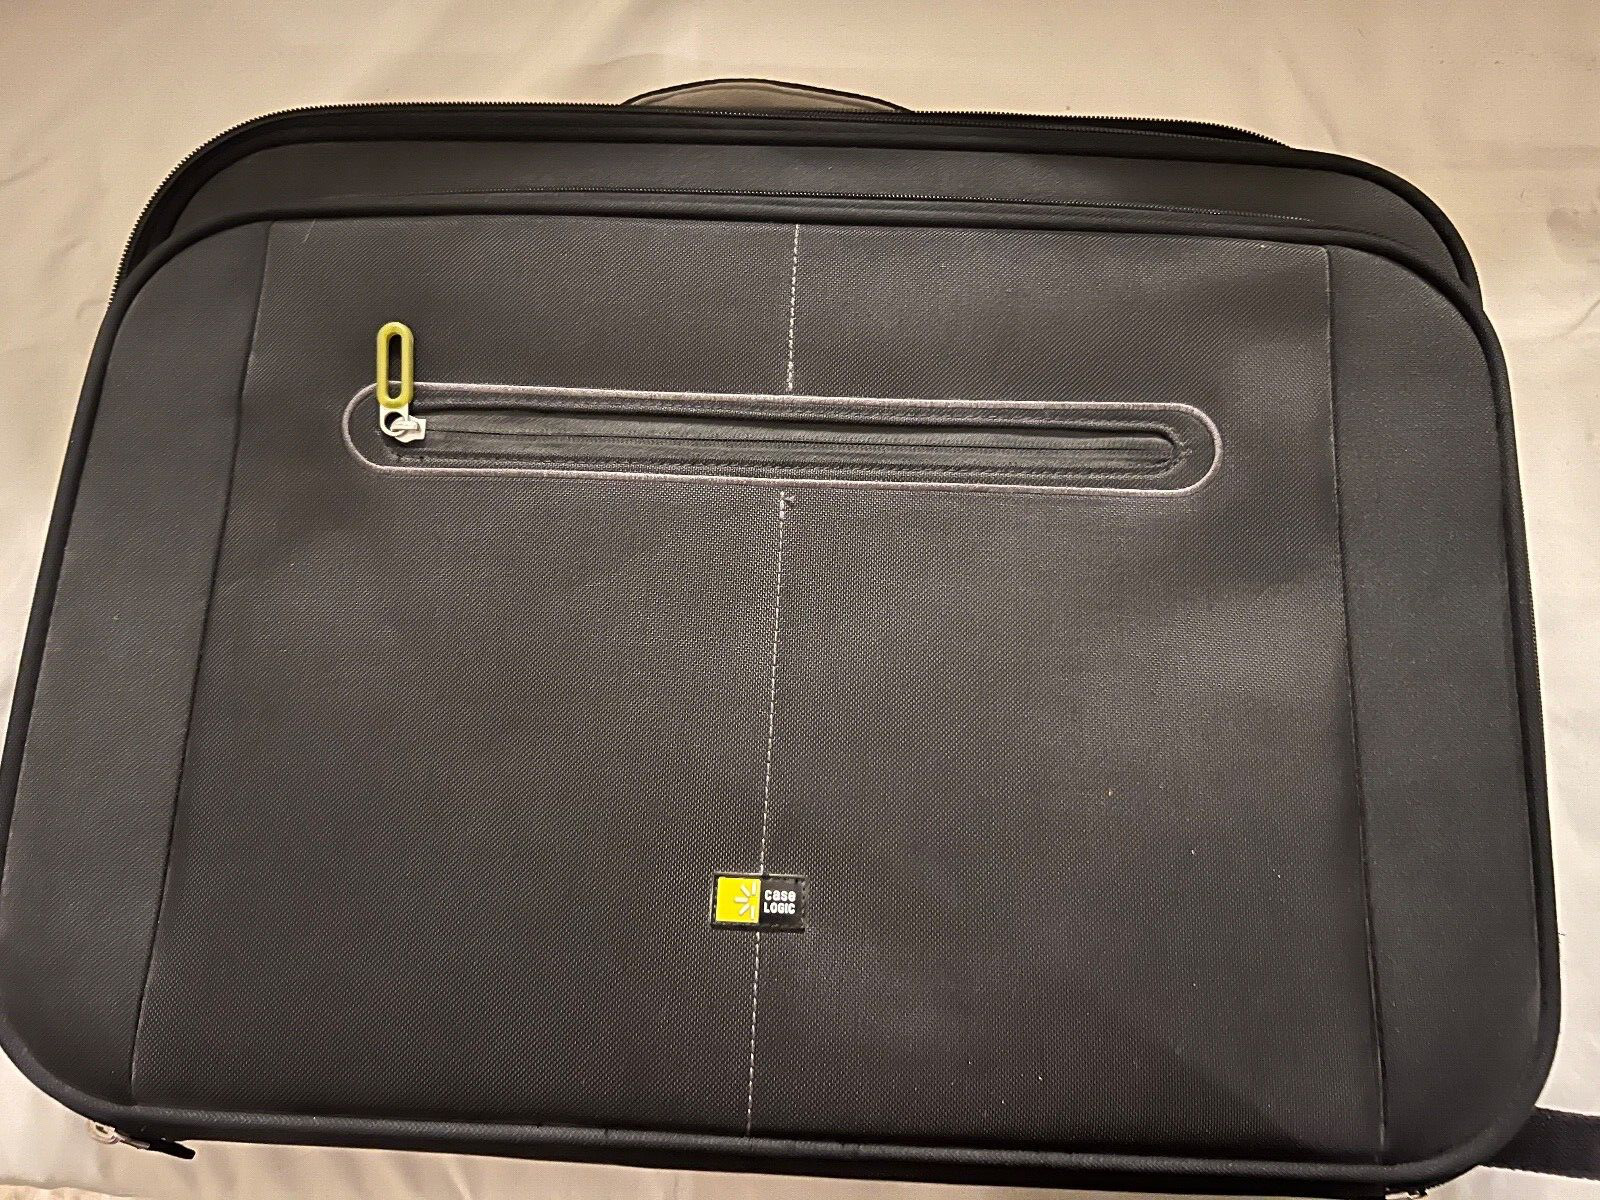 Case Logic 15.6-inch Laptop Carrying Bag Without Shoulder Strap